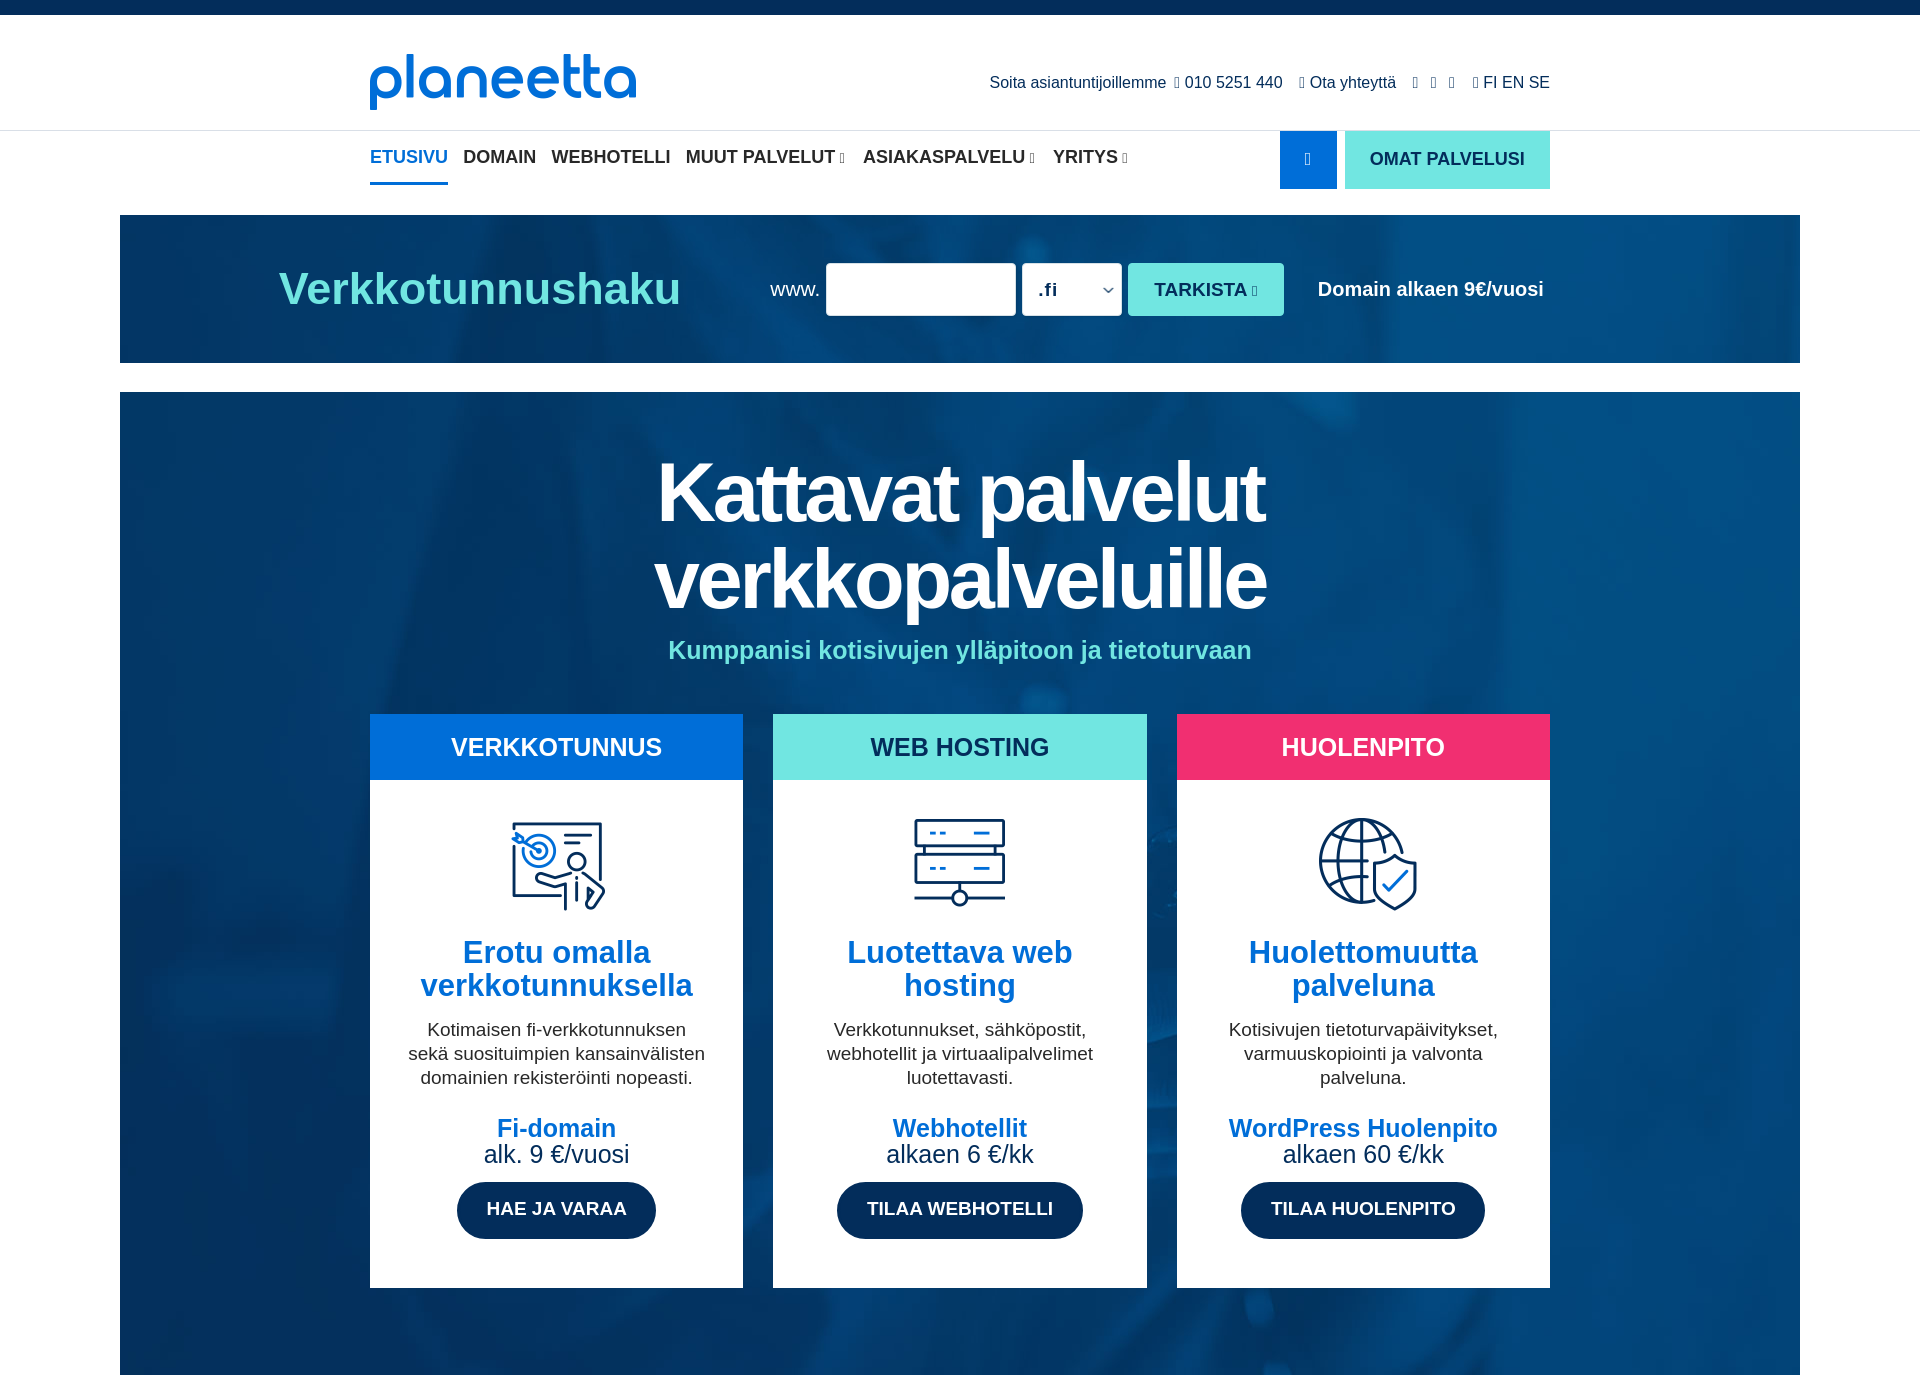 Skärmdump för käyttöpääomarahoitus.fi